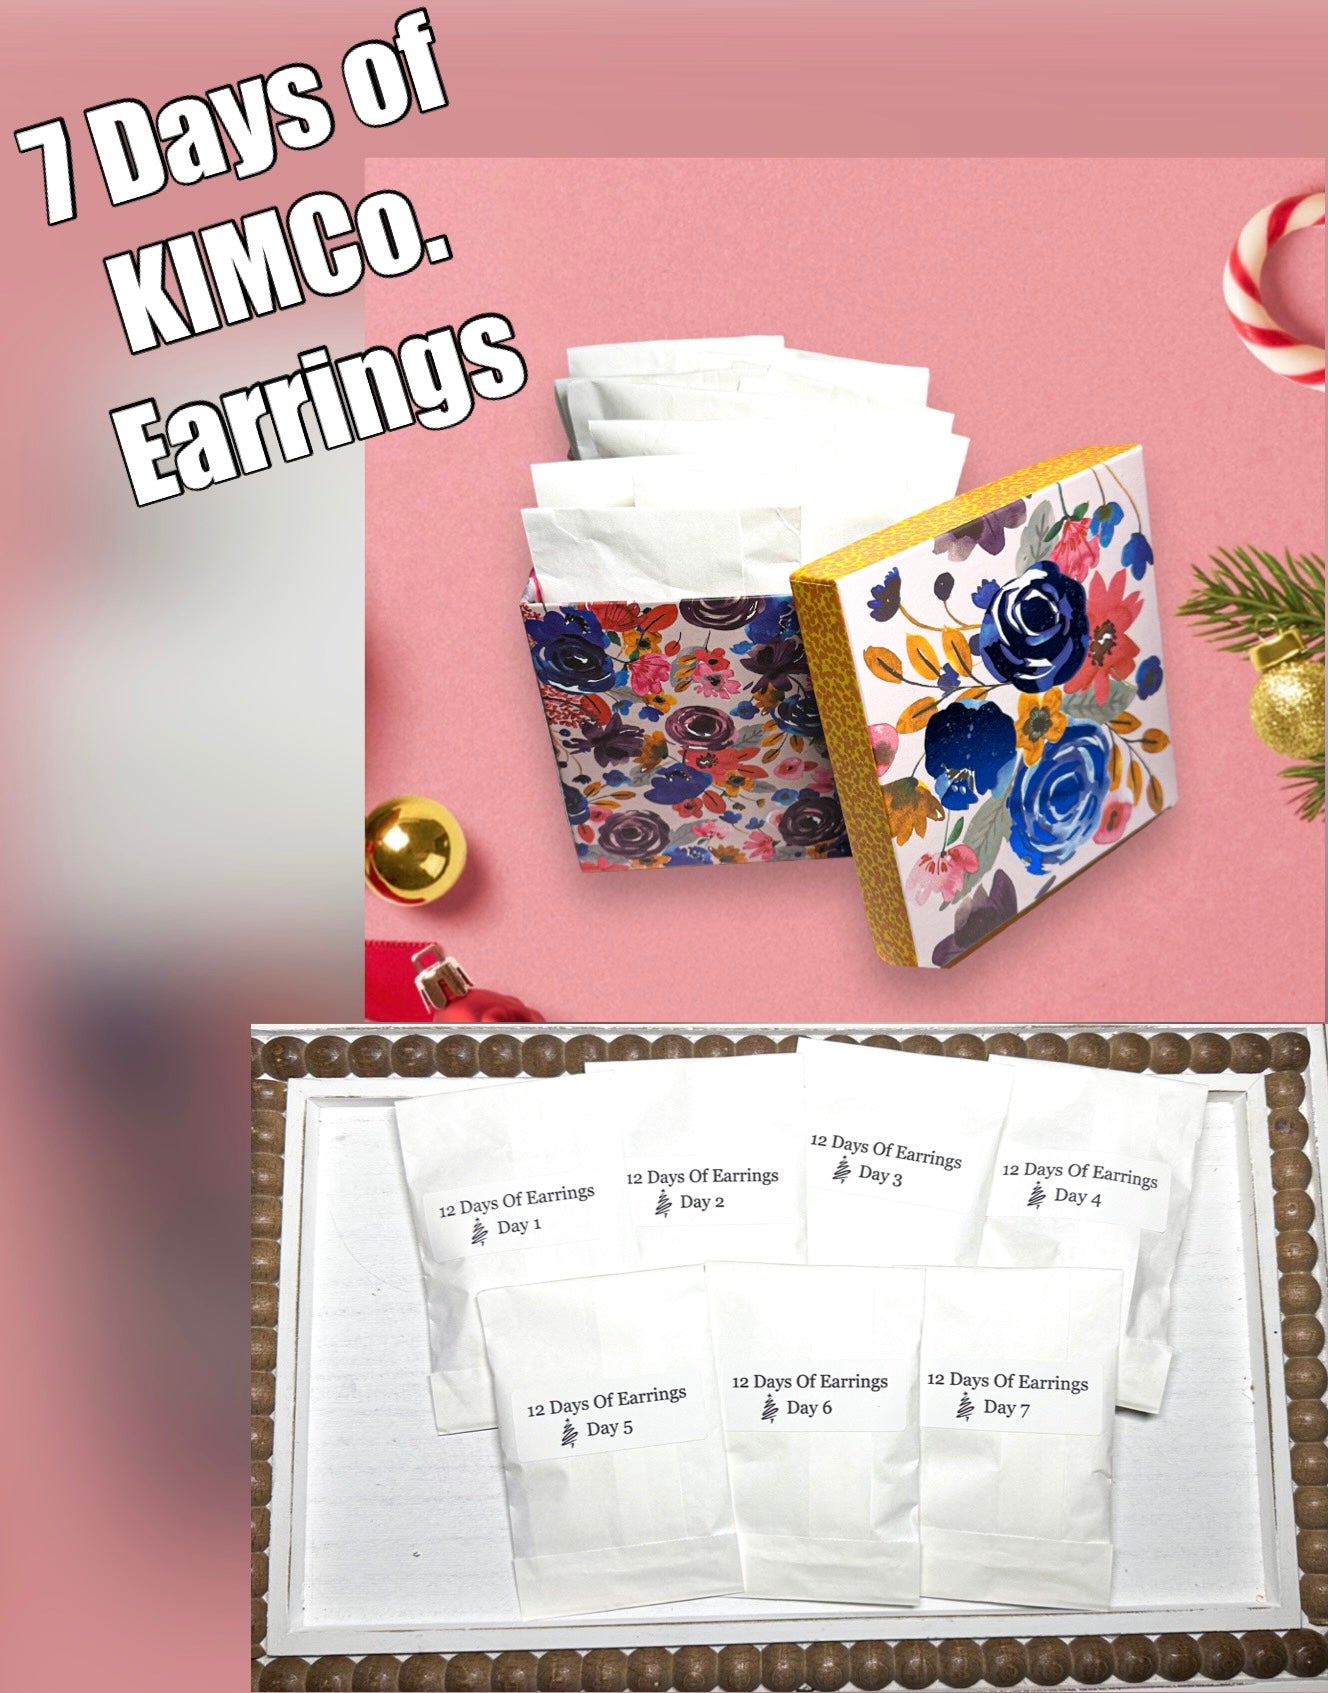 7 Days of KIMCo. Earrings